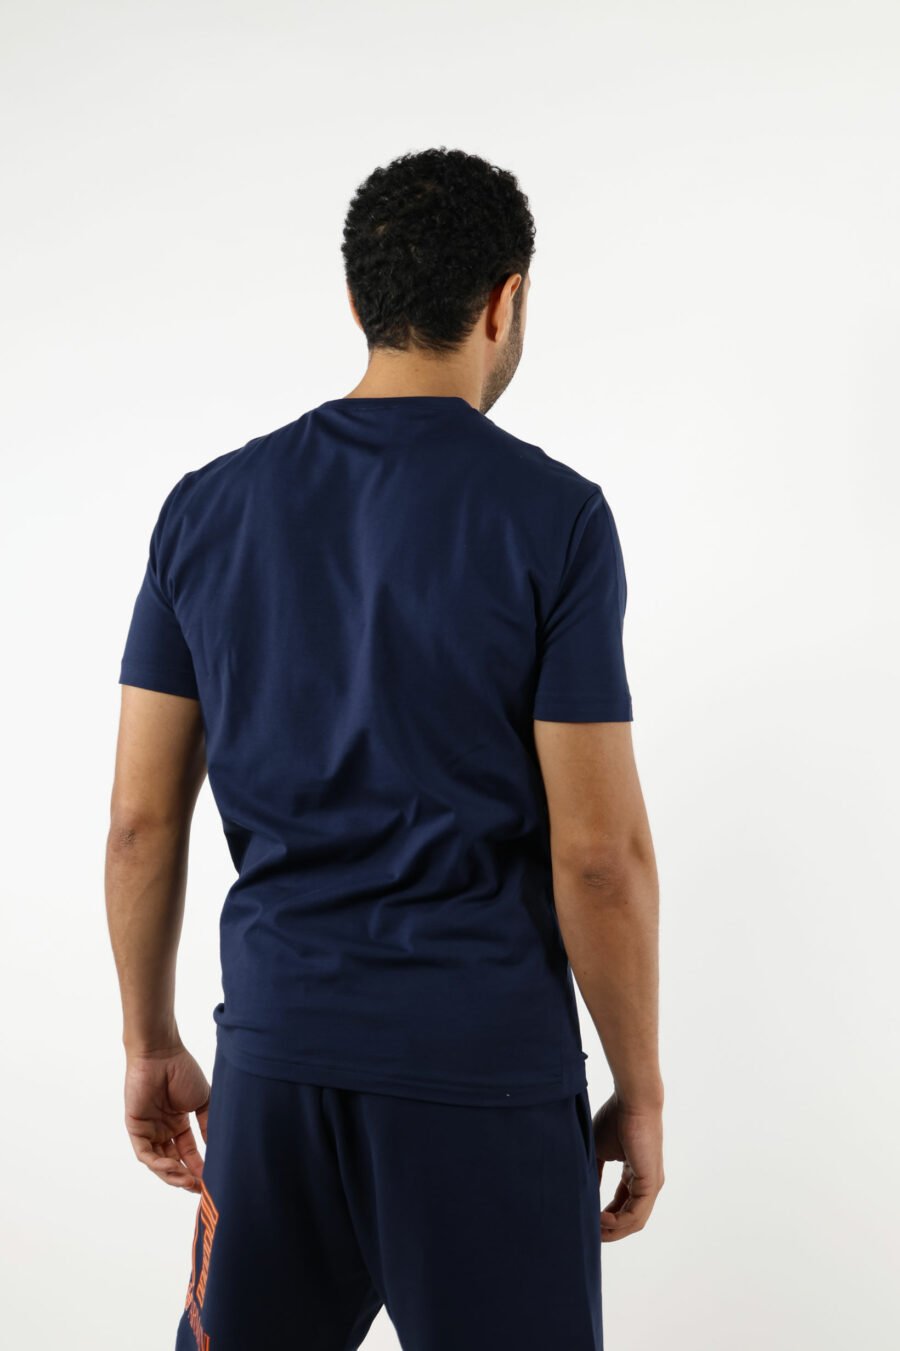 T-shirt azul escura com maxilogo "lux identity" em laranja néon - 110891